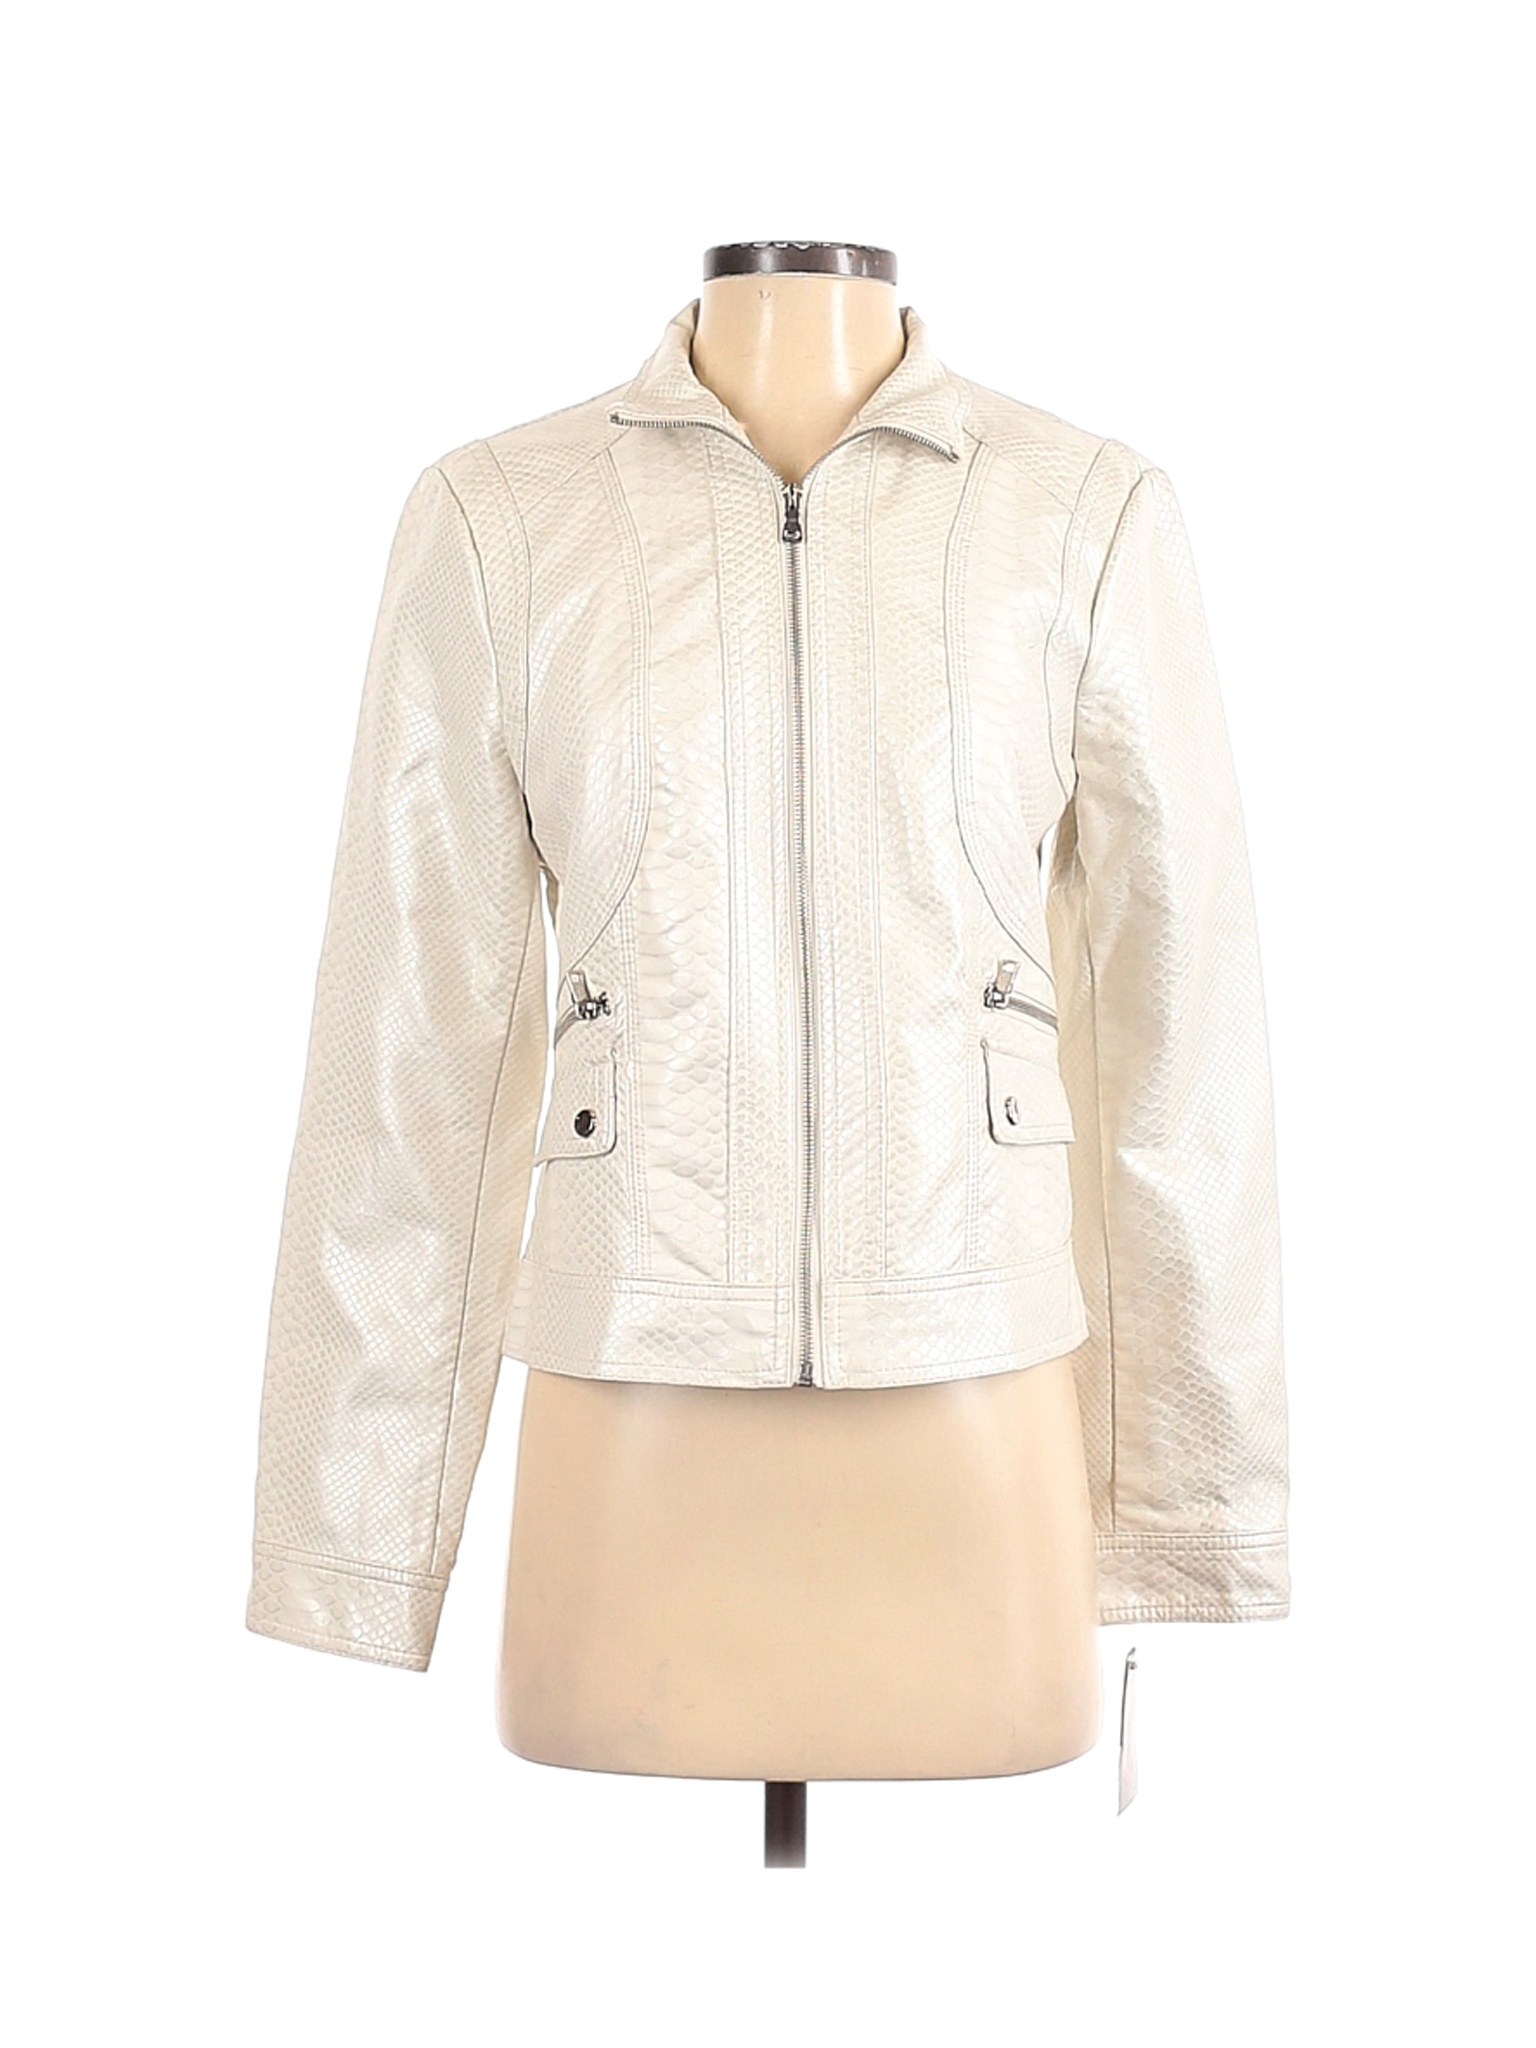 NWT Giacca Women Ivory Faux Leather Jacket S | eBay